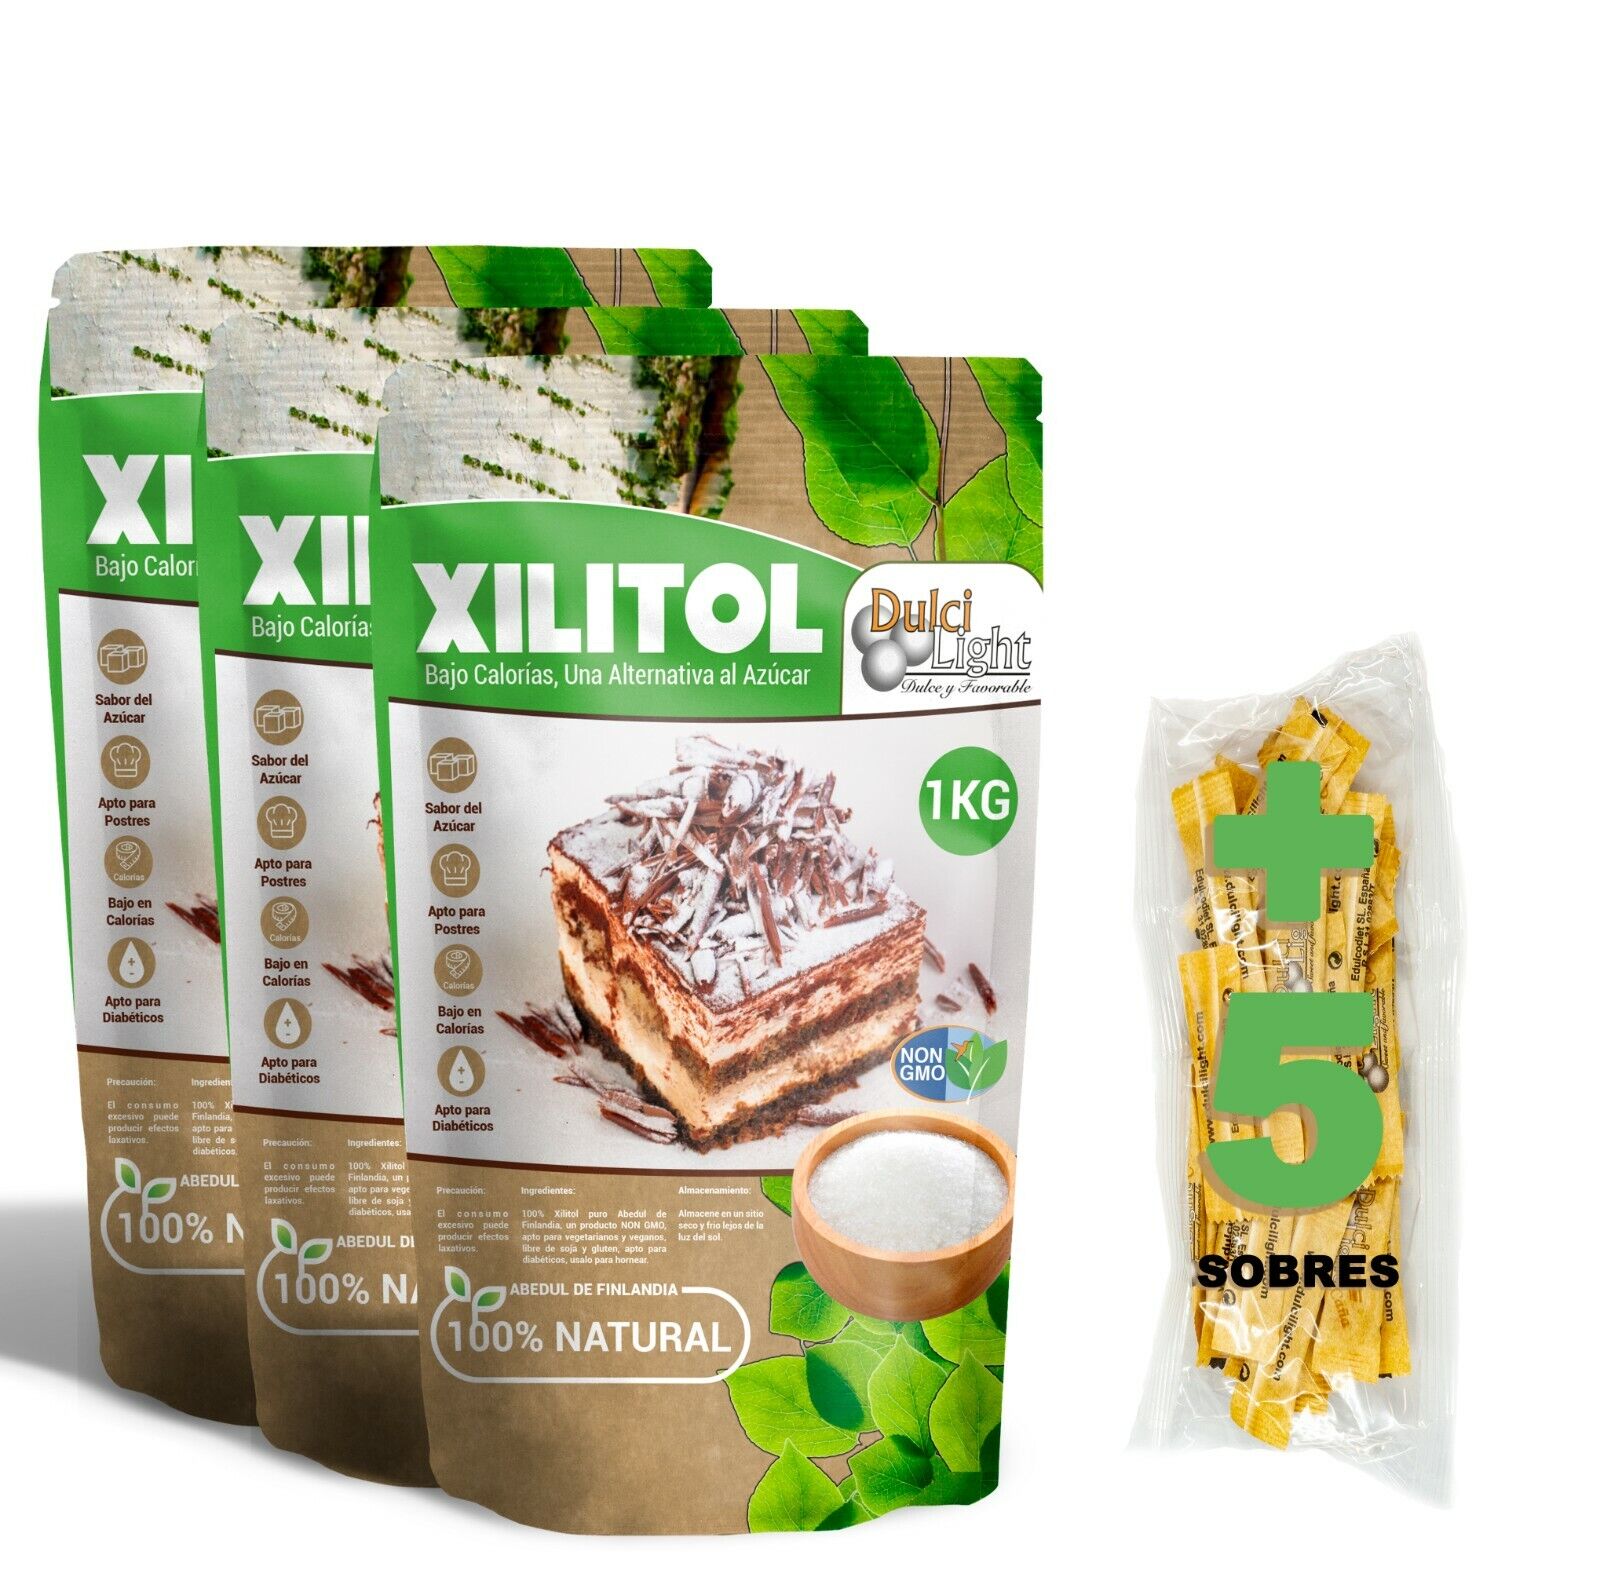 Xilitol 100% Natural Ecologico 3Kg Azucar de Abedul de Finlandia Edulcorante